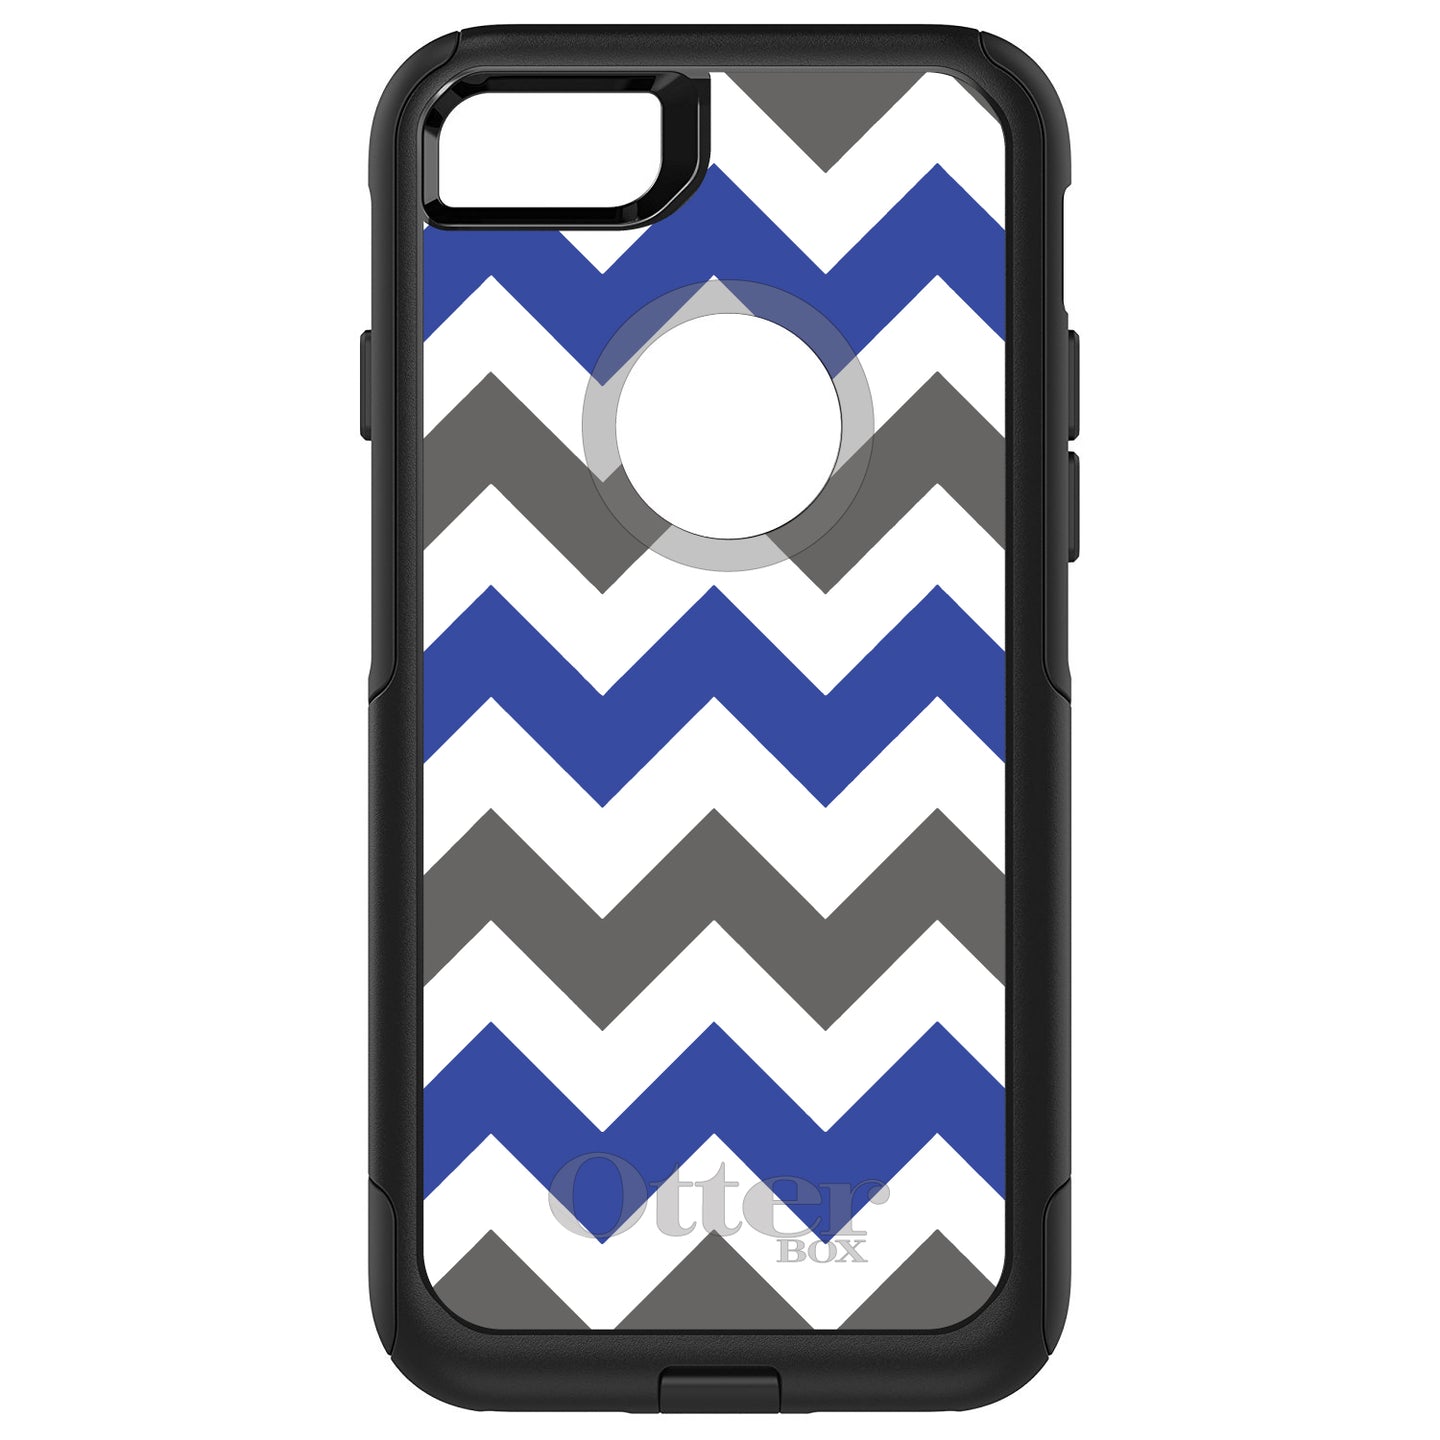 DistinctInk™ OtterBox Commuter Series Case for Apple iPhone or Samsung Galaxy - Blue Grey Chevron Stripes